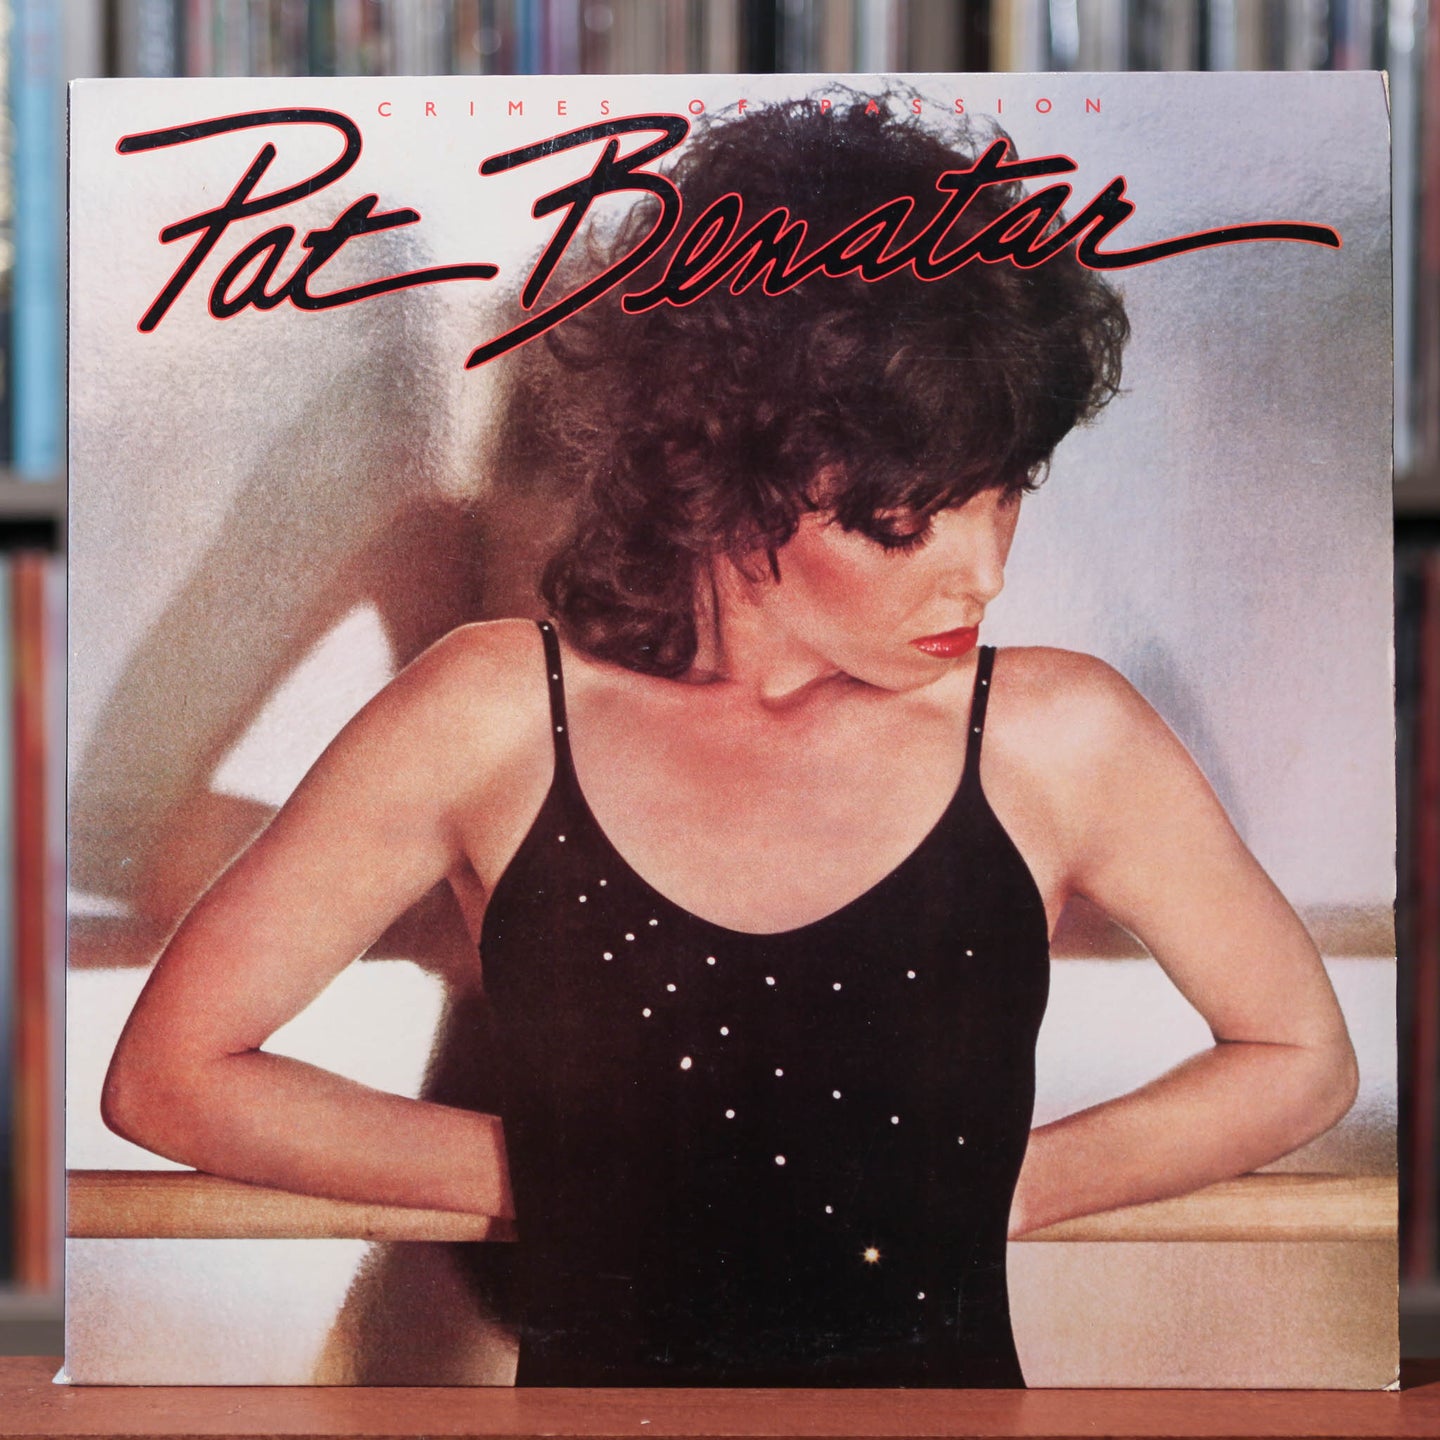 Pat Benatar - Crimes Of Passion - 1980 Chrysalis, EX/VG